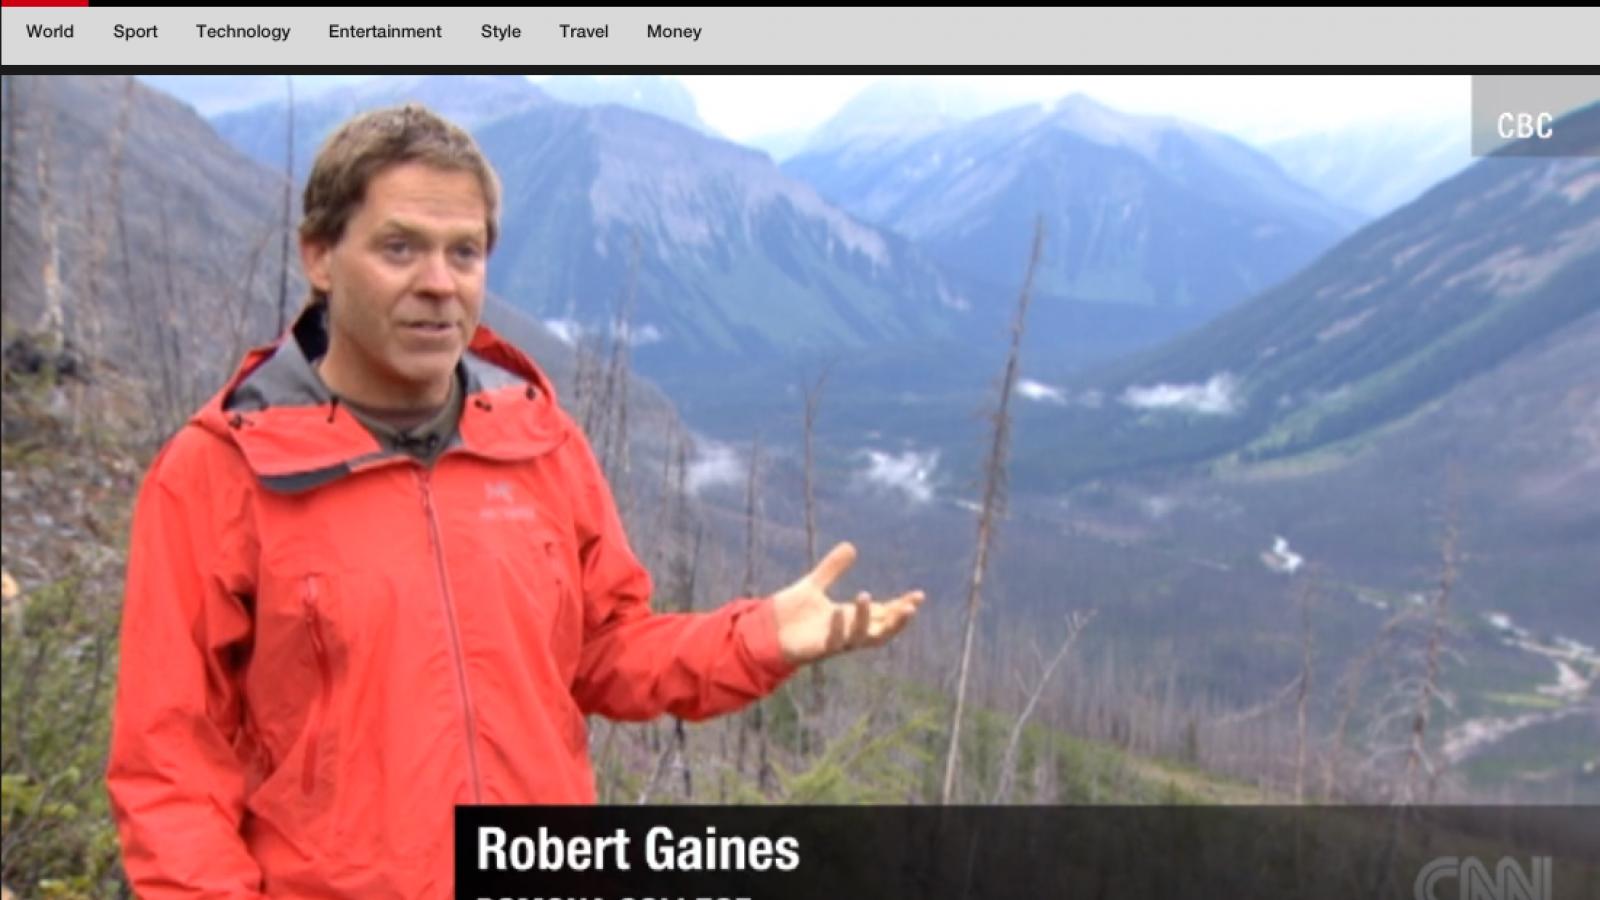 Bob Gaines on CNN website